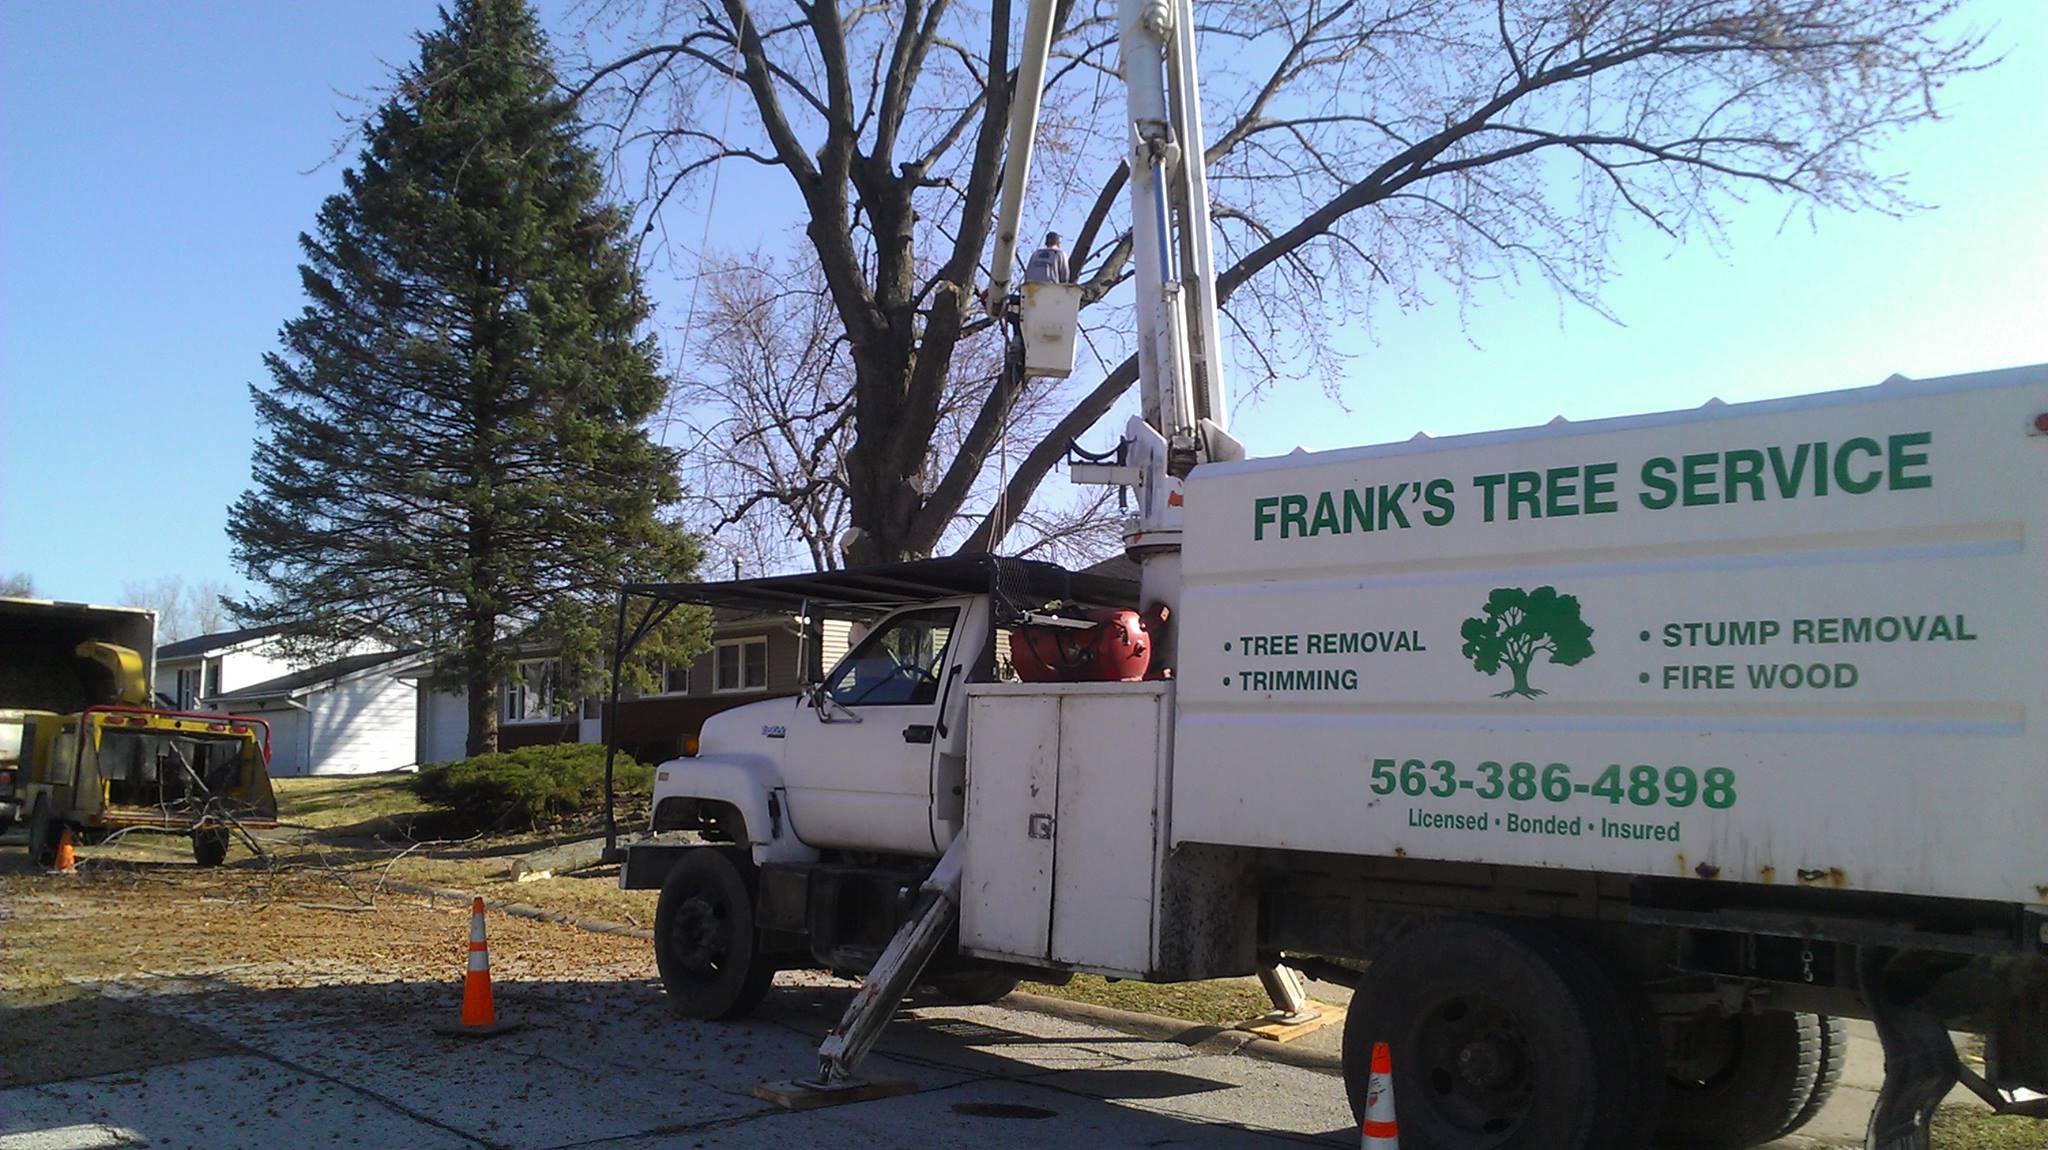 Frank's Tree Service